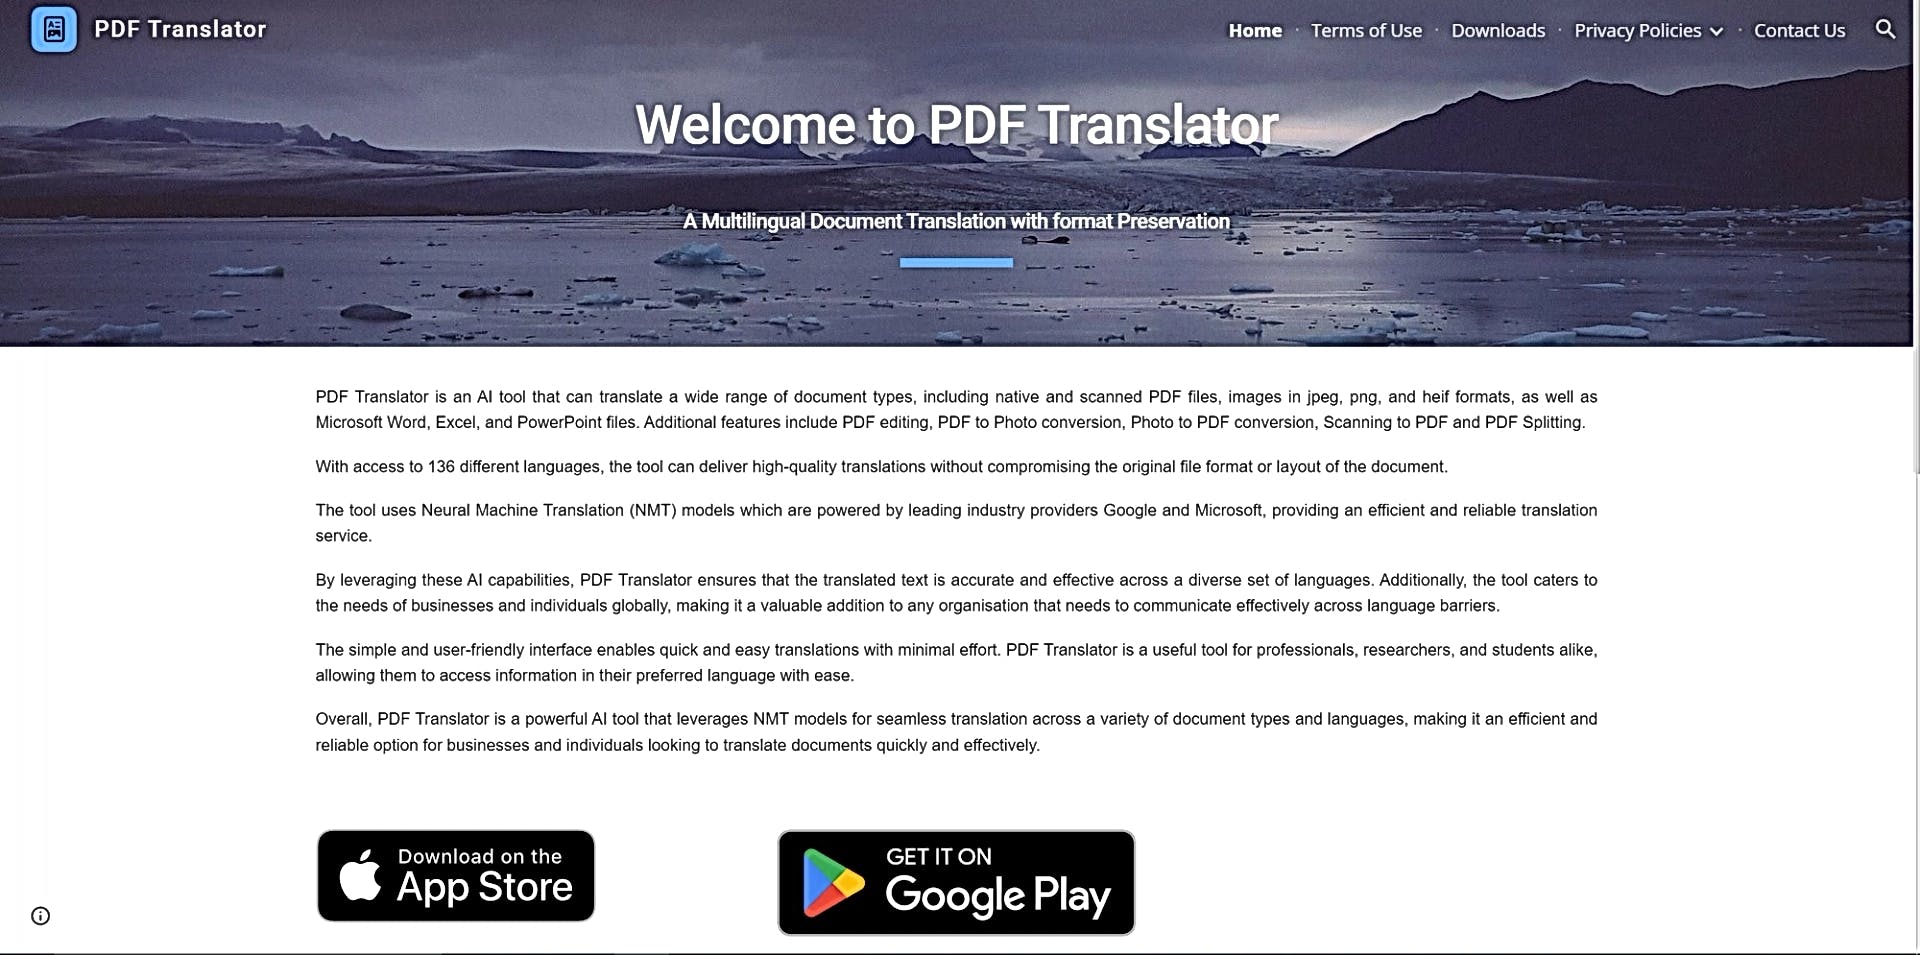 PDF Translator featured